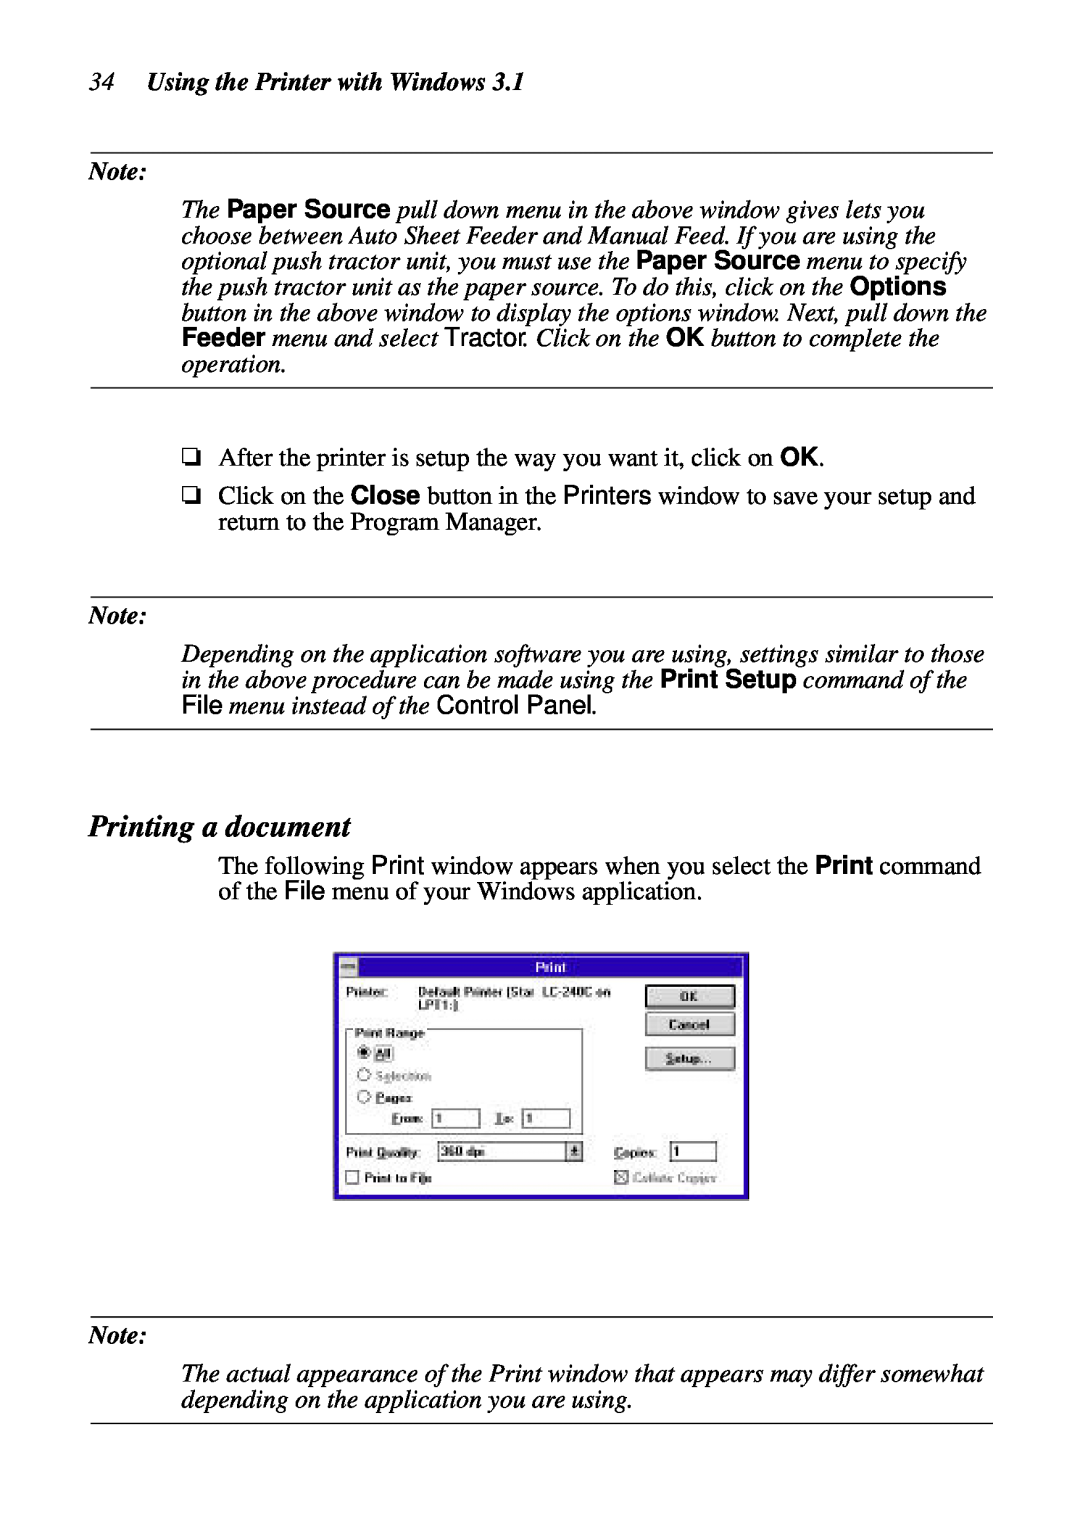 Star Micronics NX-2460C user manual Printing a document, Using the Printer with Windows 